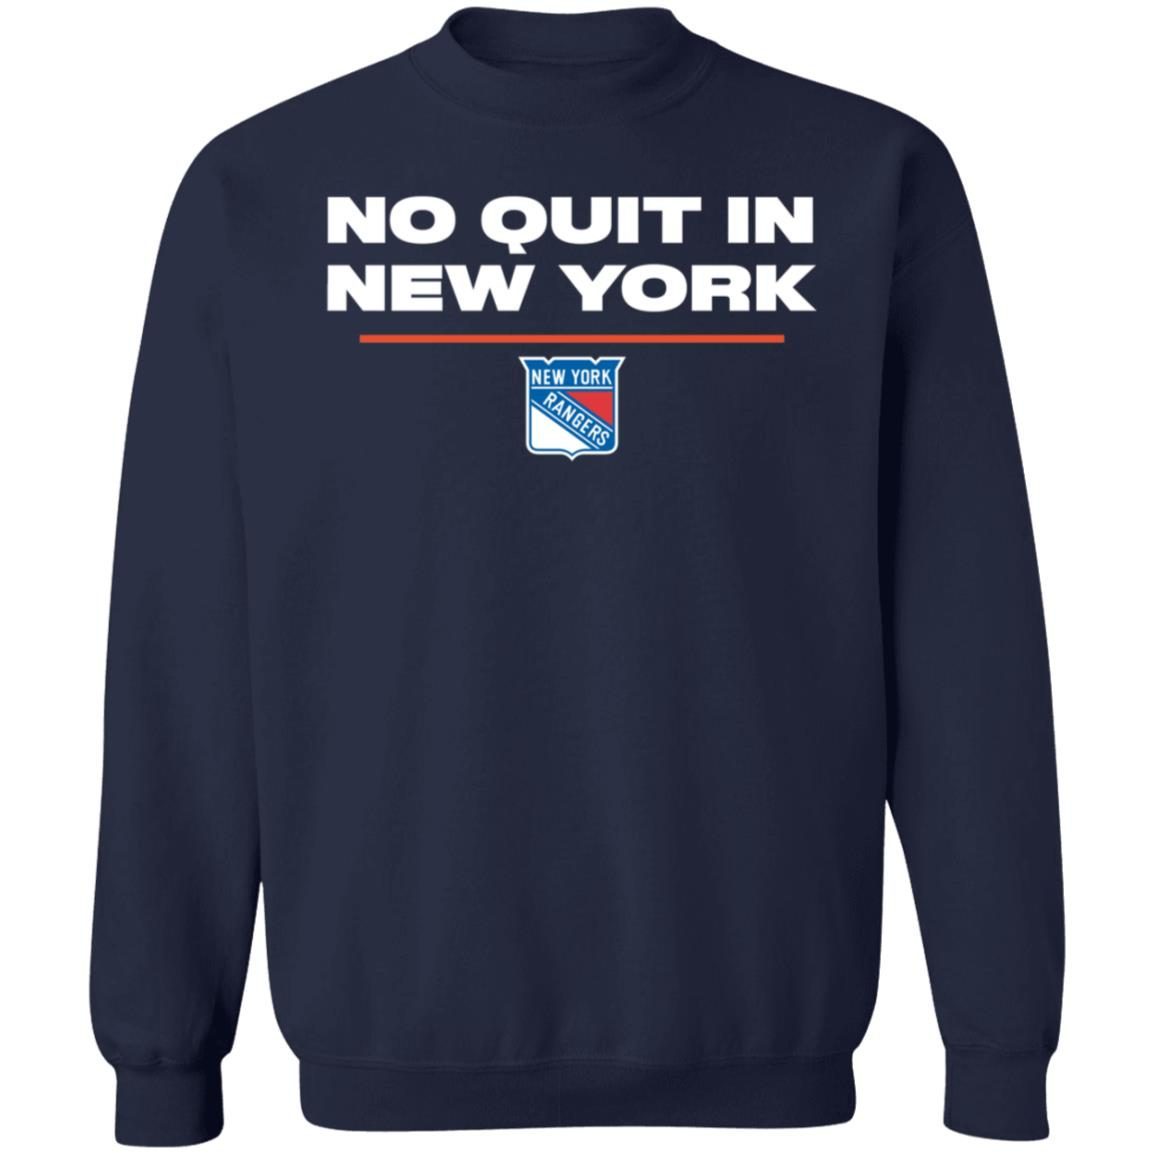 No Quit In New York Rangers shirt